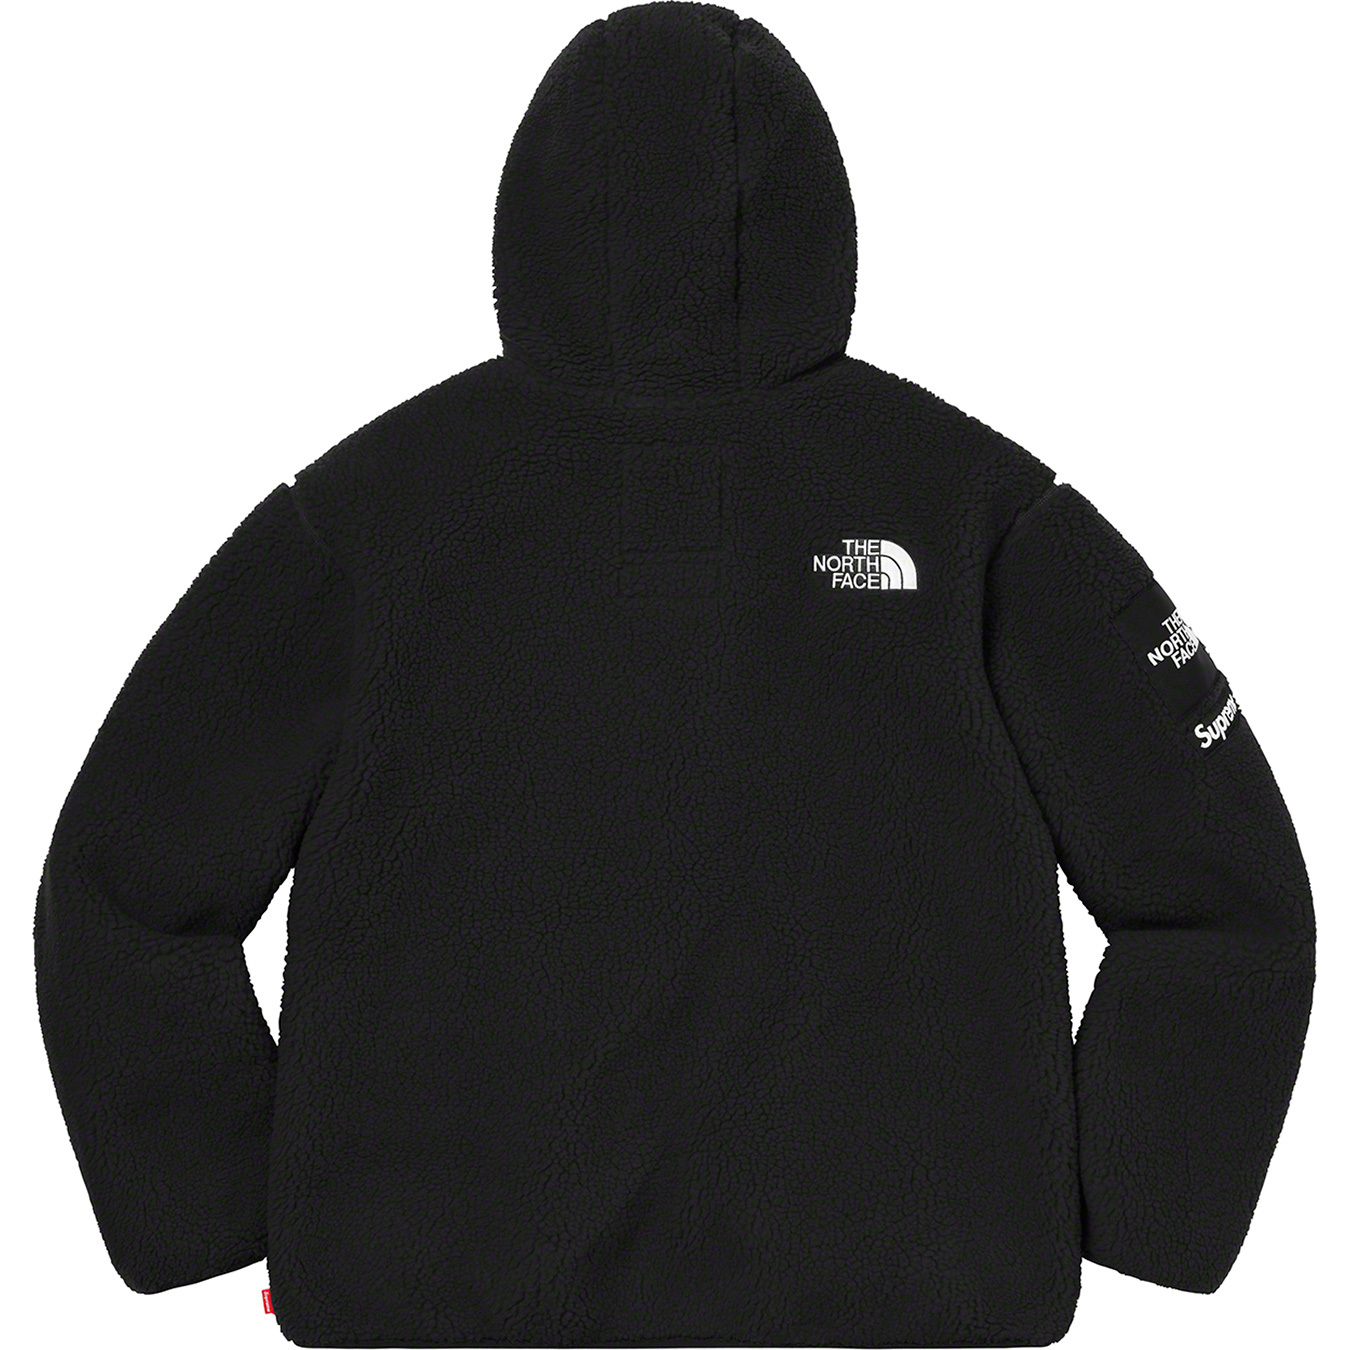 The North Face S Logo Hooded Fleece Jacket - fall winter 2020 